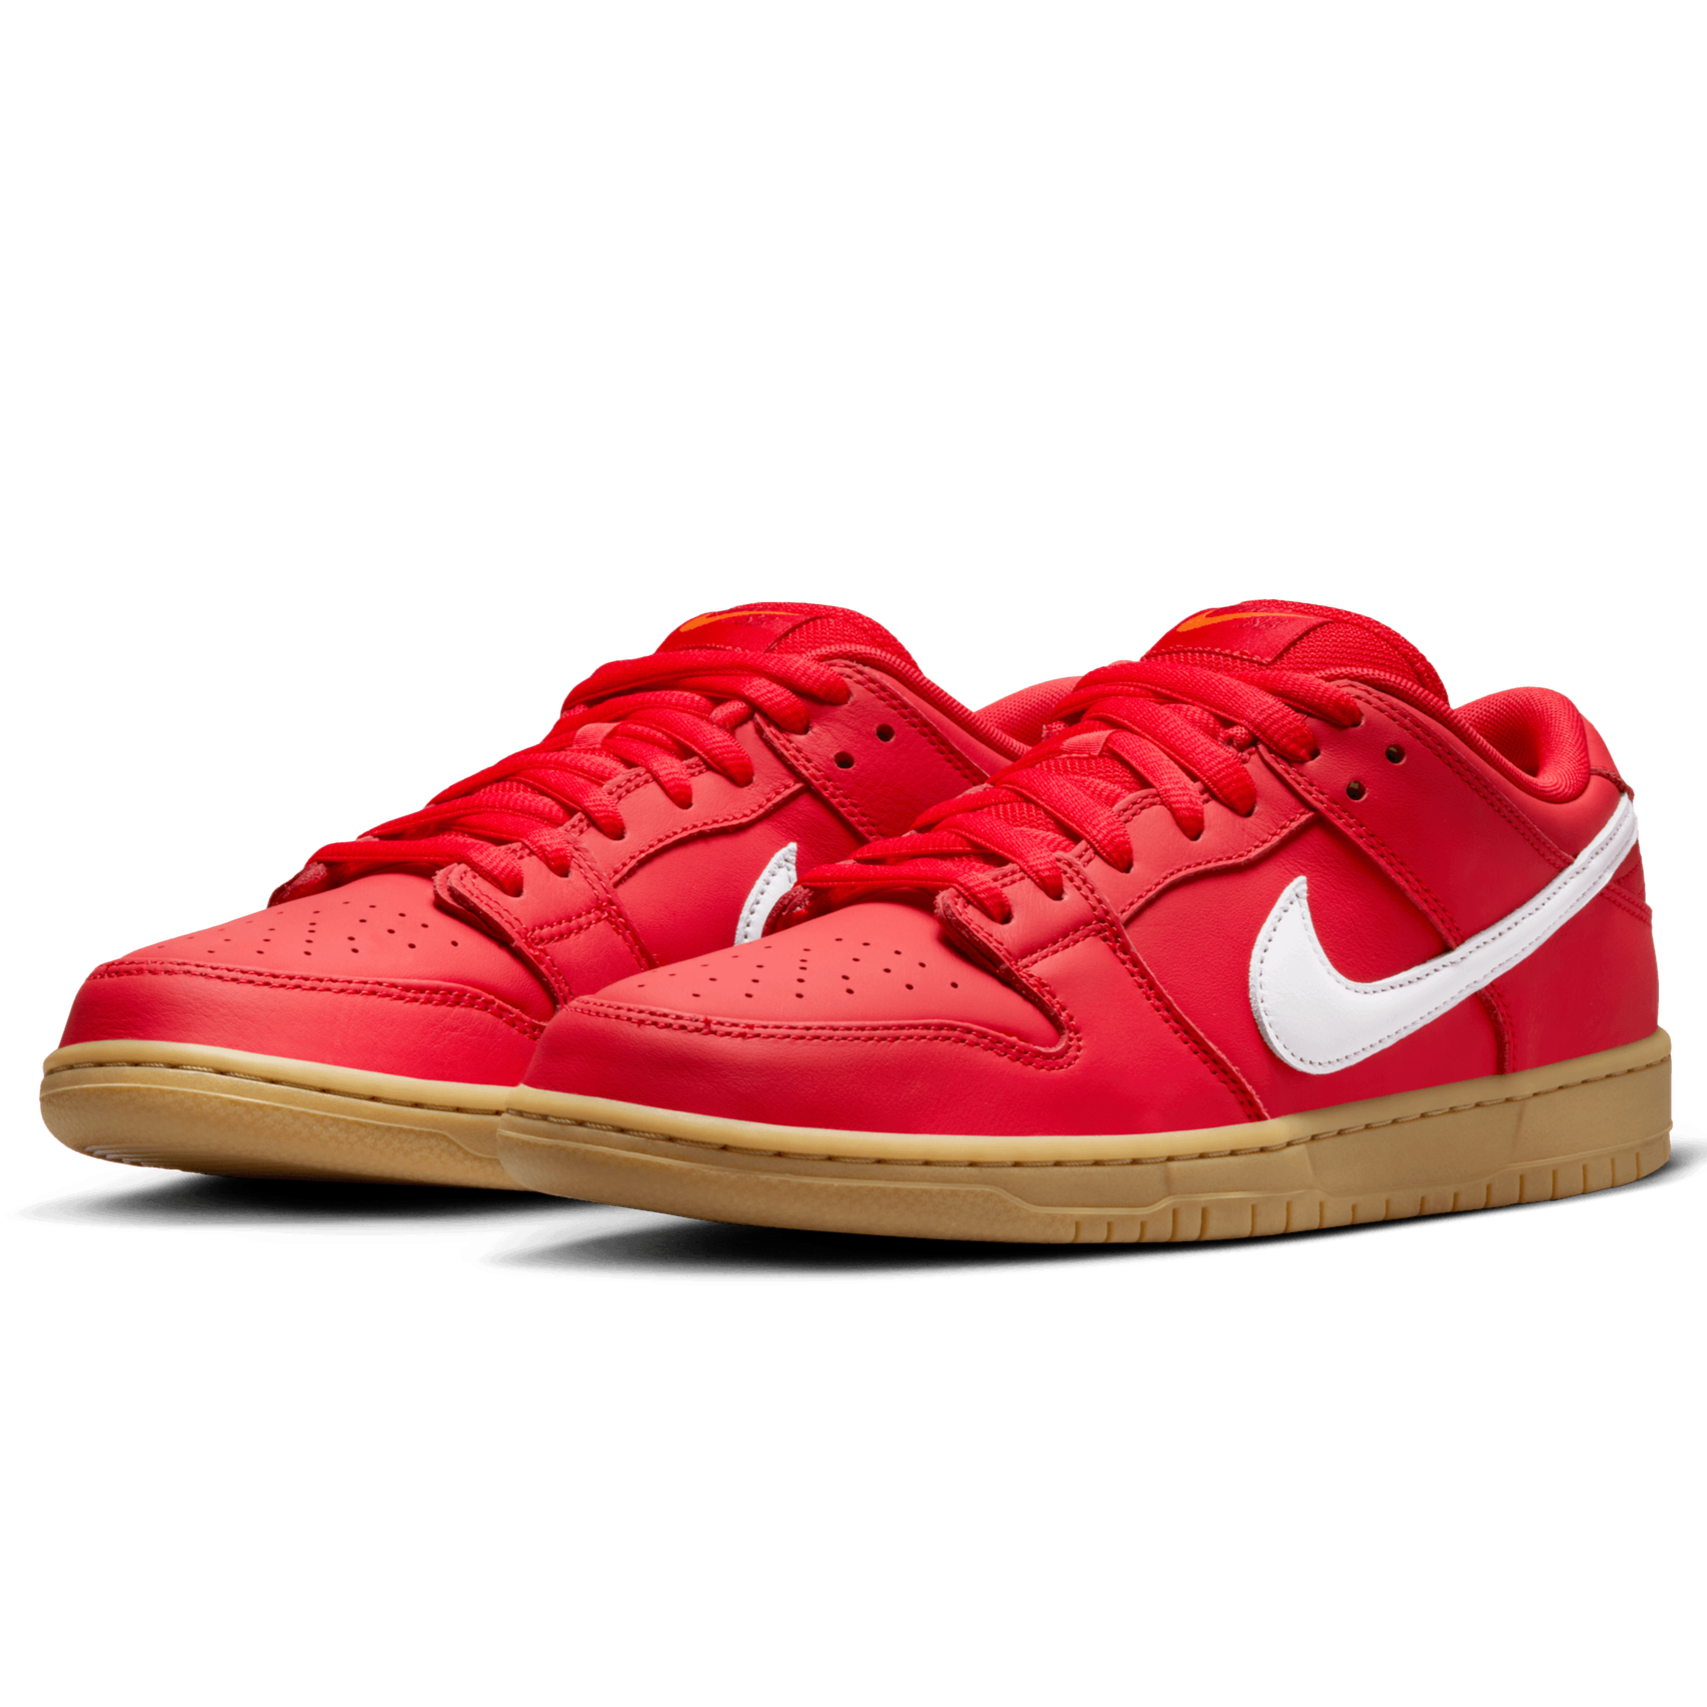 Red/Gum Orange Label Dunk Low Pro Nike SB Skate Shoe Front